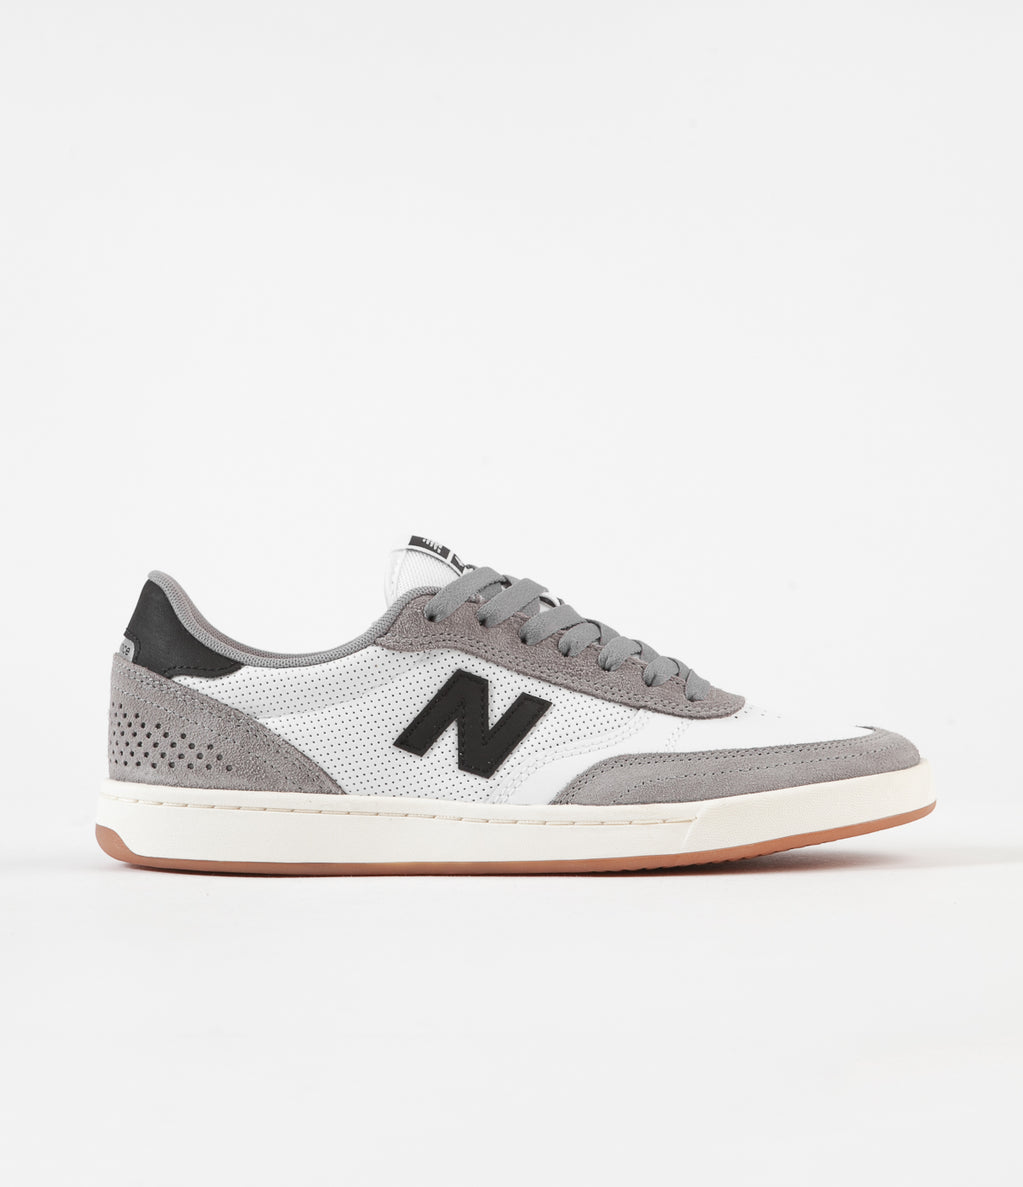 New Balance Numeric 440 Shoes - Grey / White / Black | Flatspot